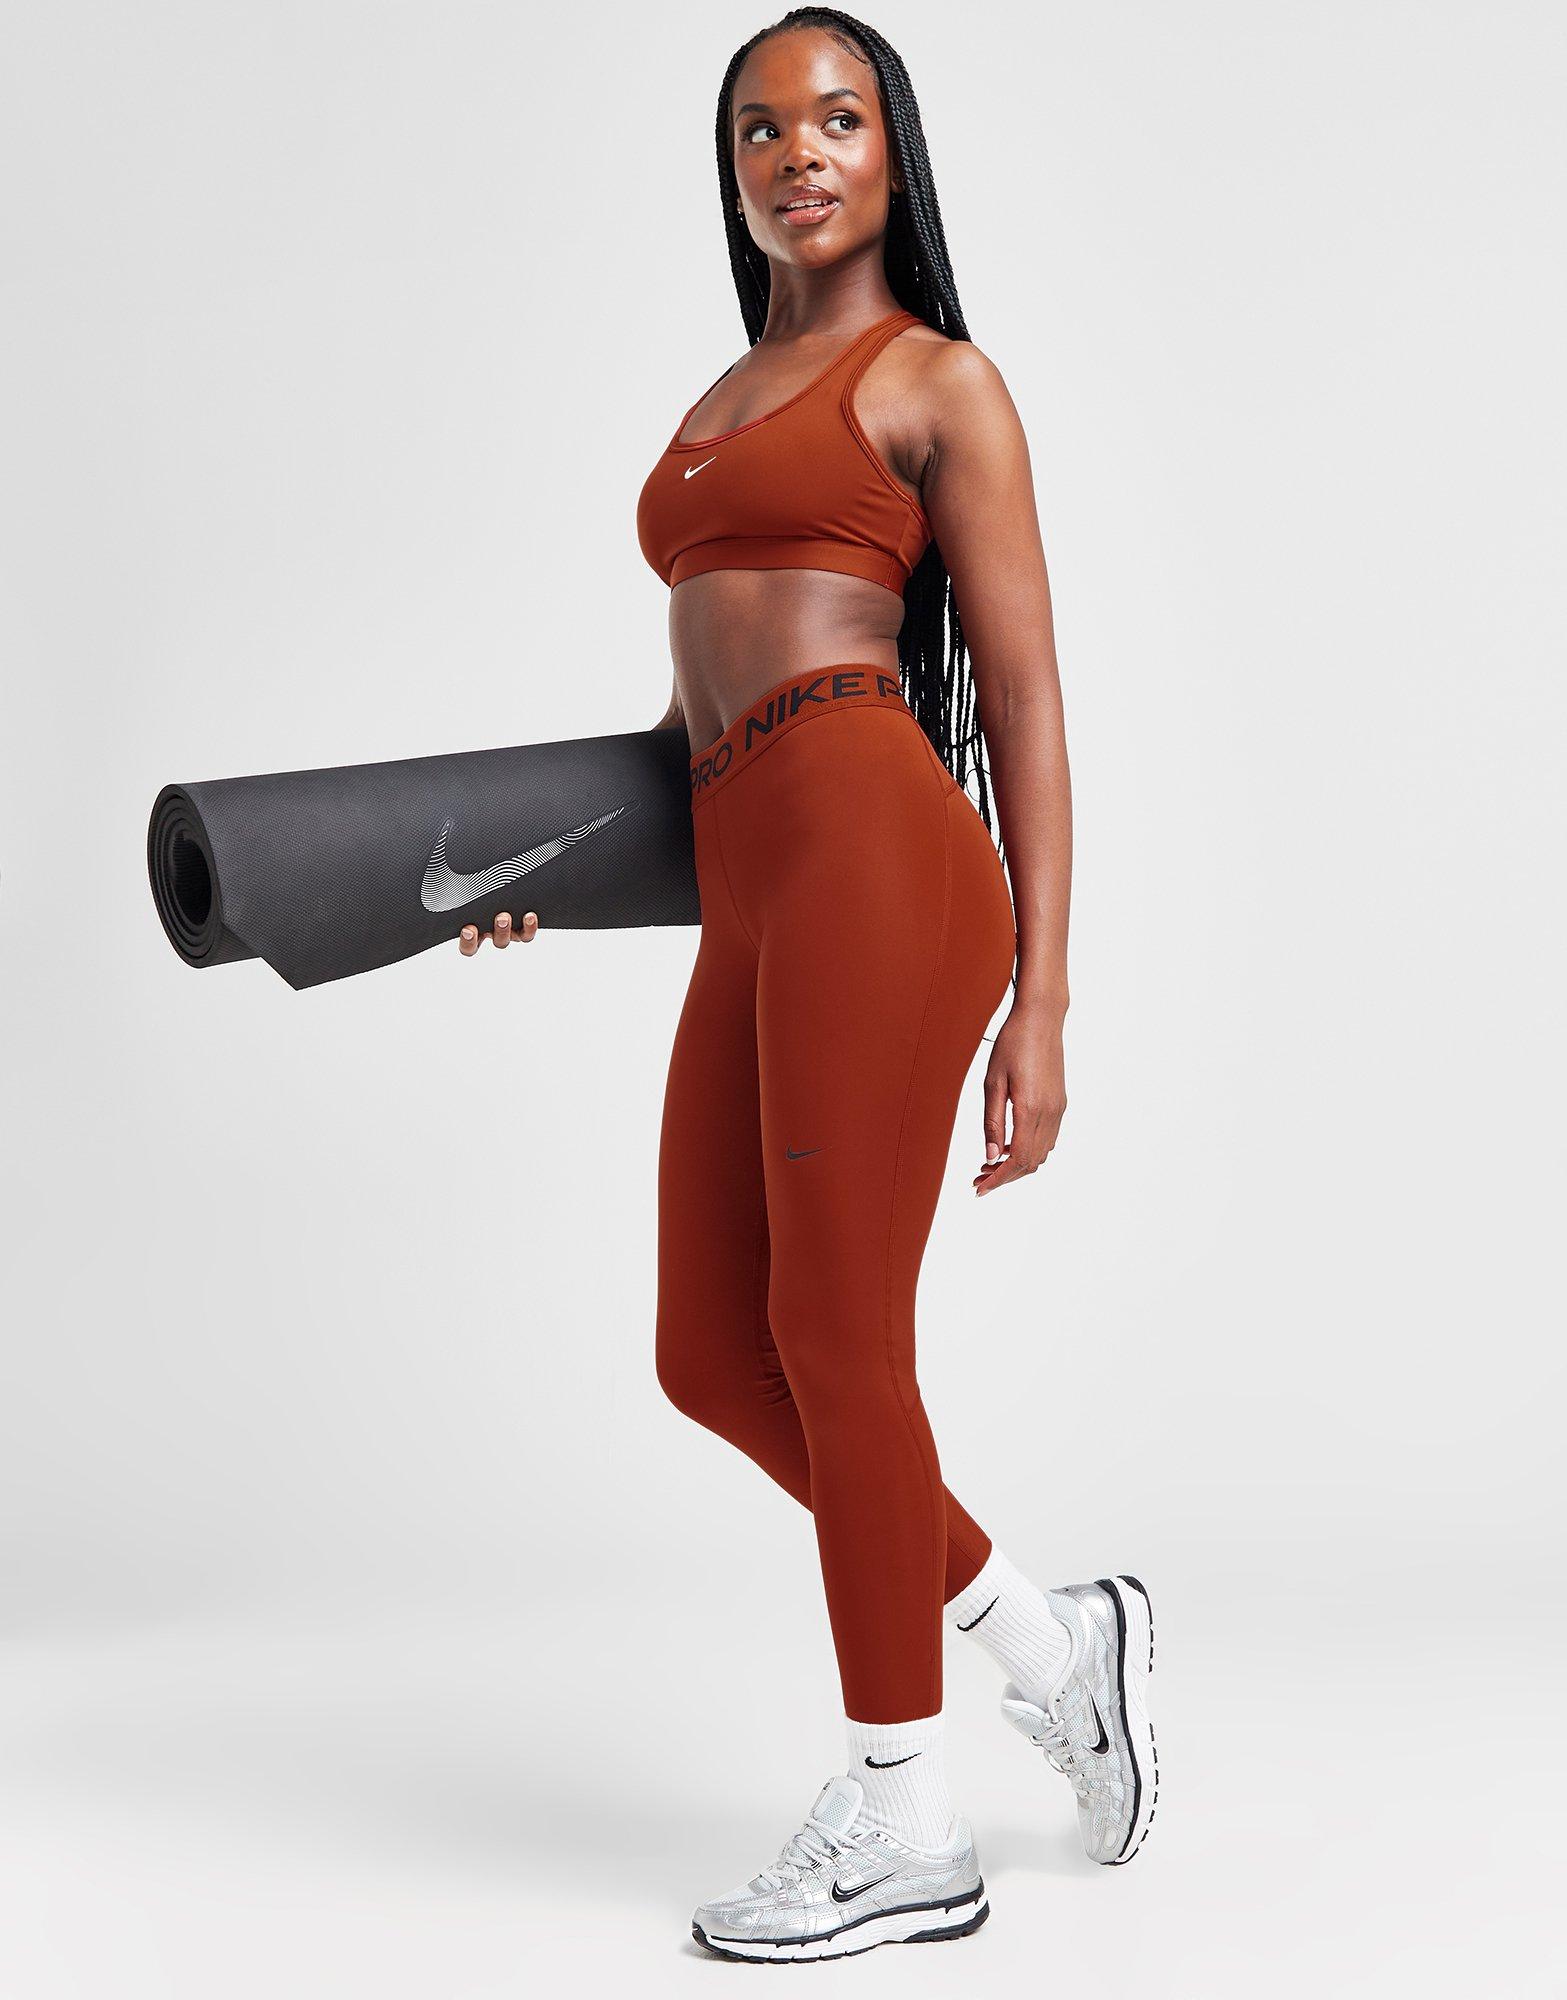 Orange Nike Pro Training Dri-FIT Tights